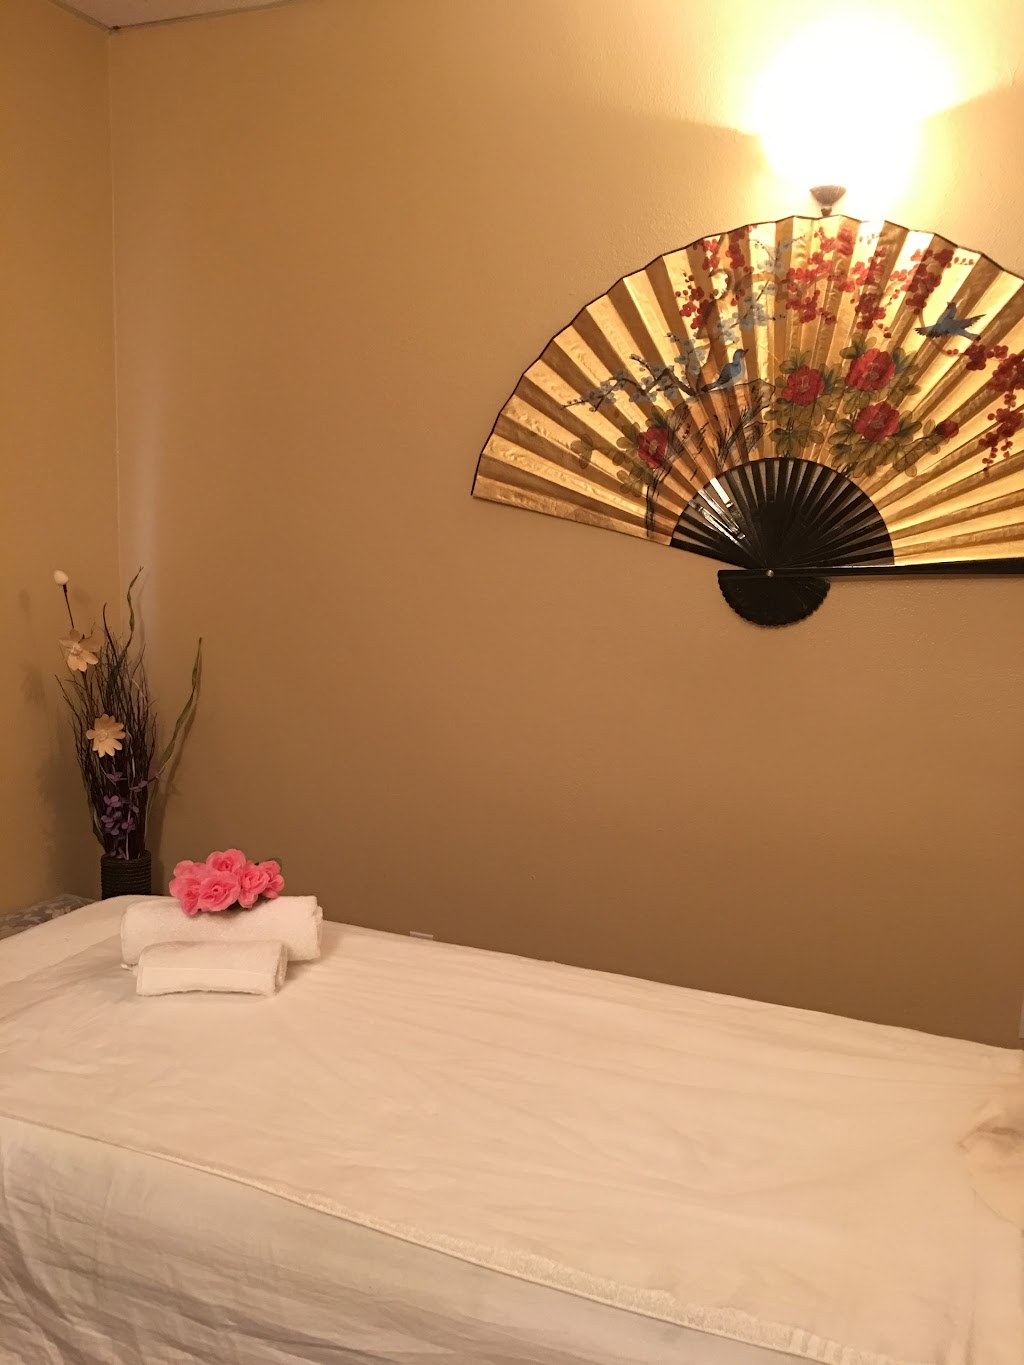 Star massage-Asian Massage | 1434 S Mission Rd STE A, Fallbrook, CA 92028, USA | Phone: (760) 621-0005